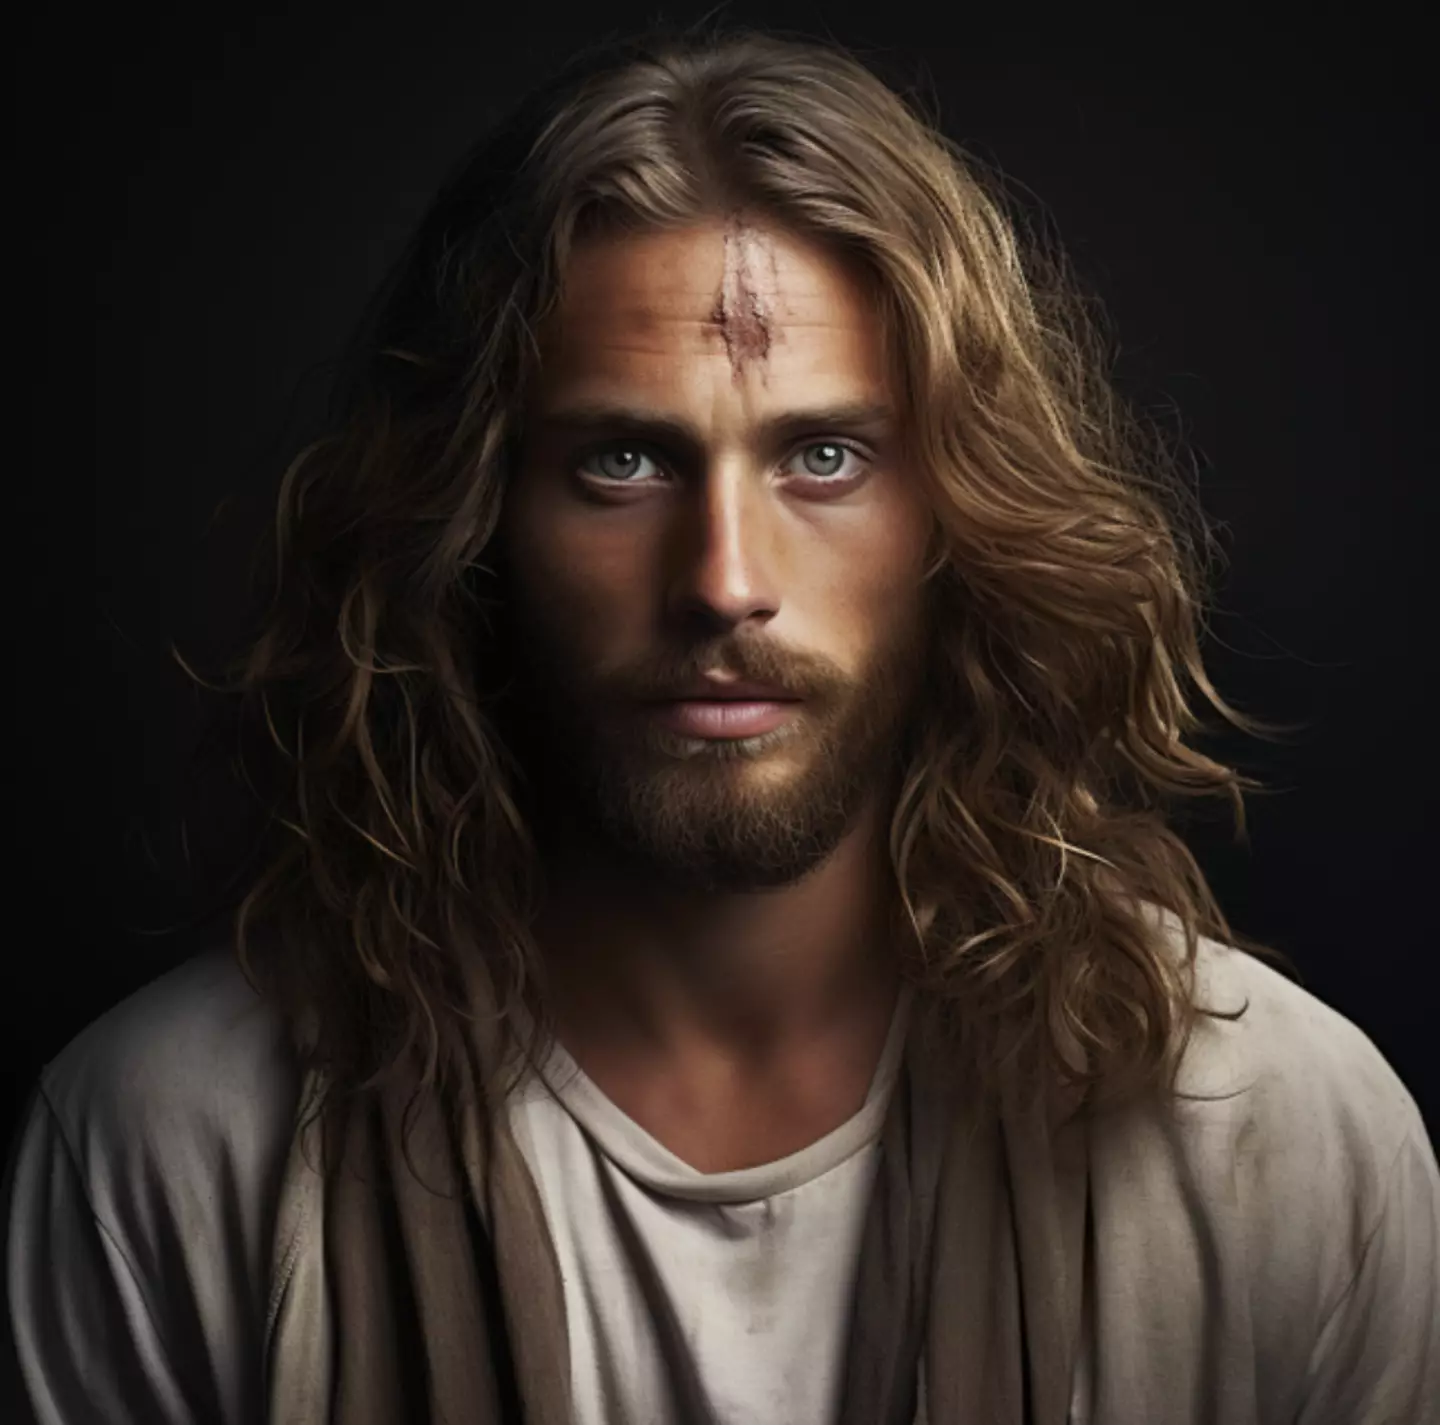 Who's Jesus' hairdresser?